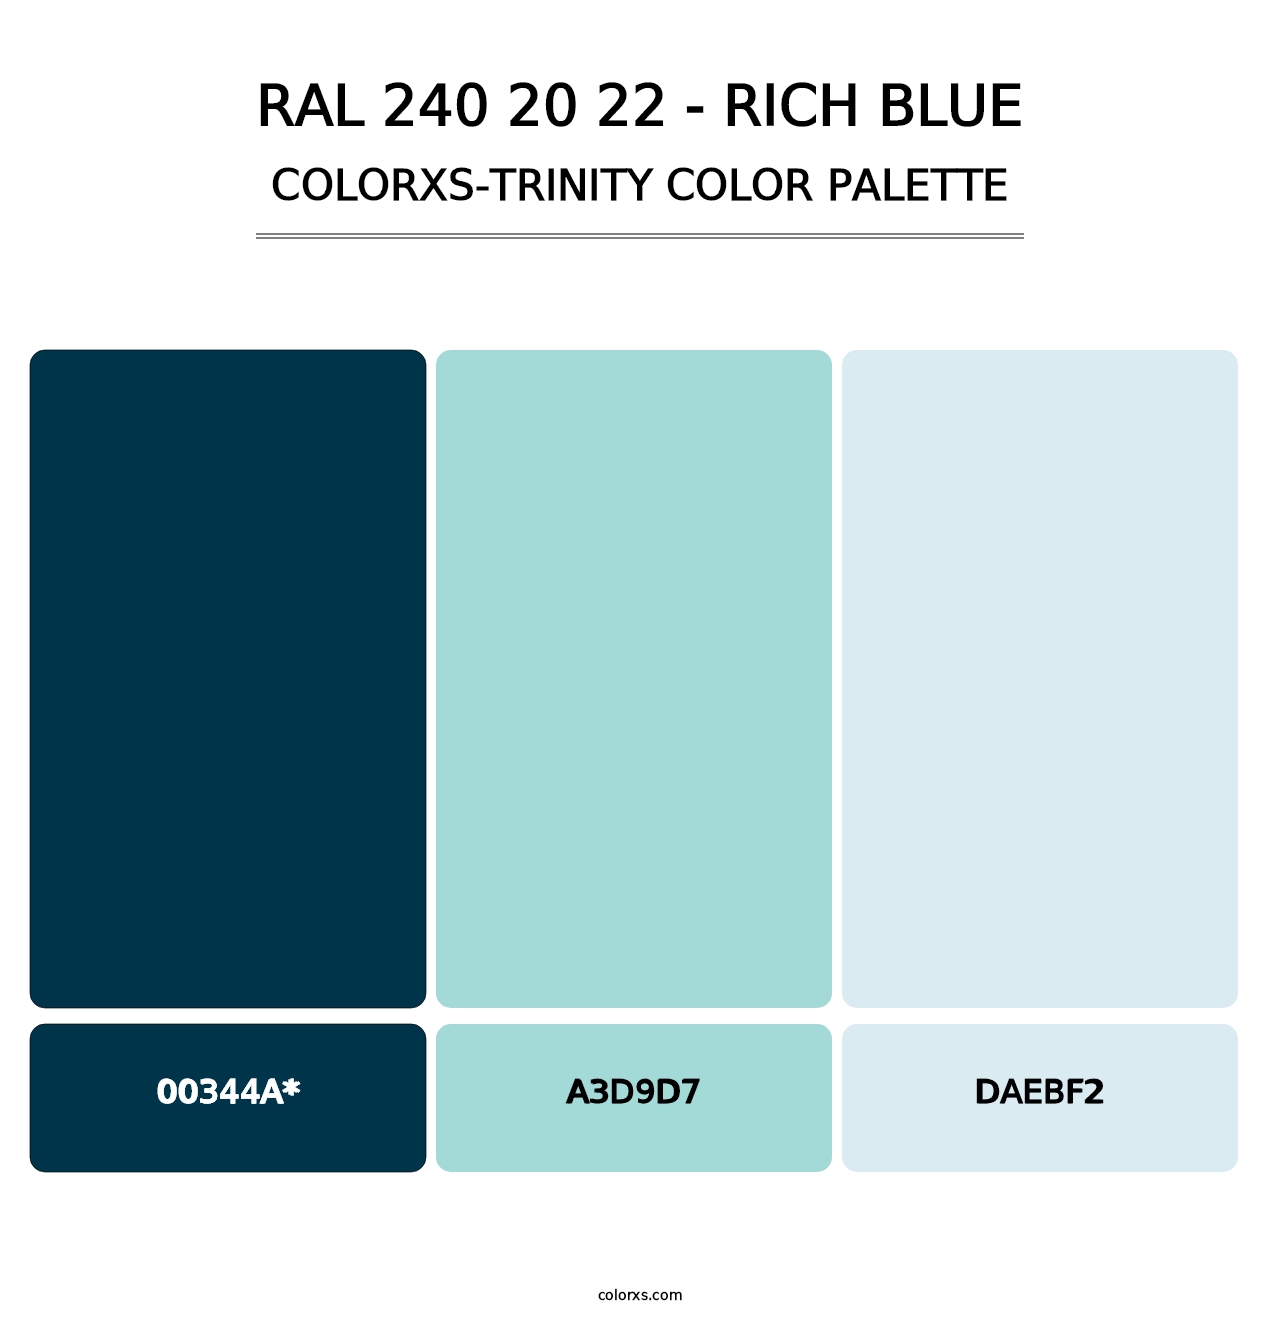 RAL 240 20 22 - Rich Blue - Colorxs Trinity Palette